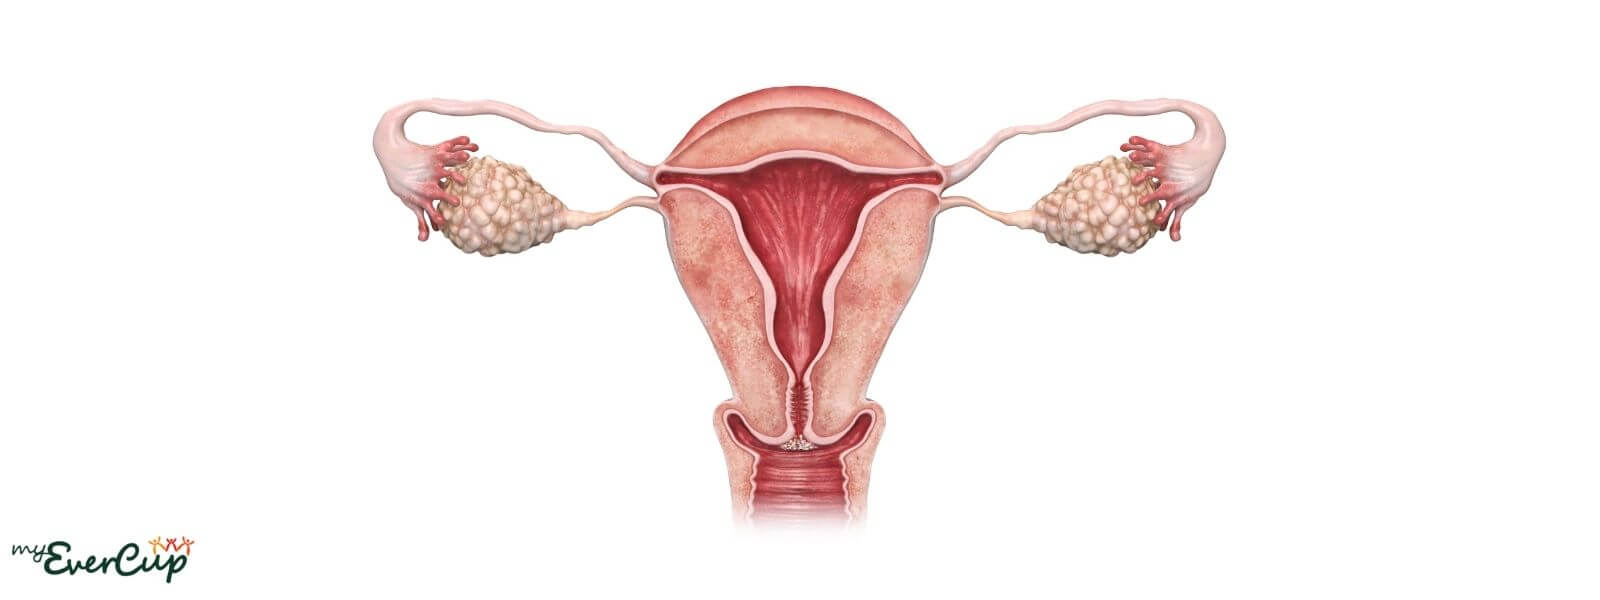 pms symptoms affect the uterus